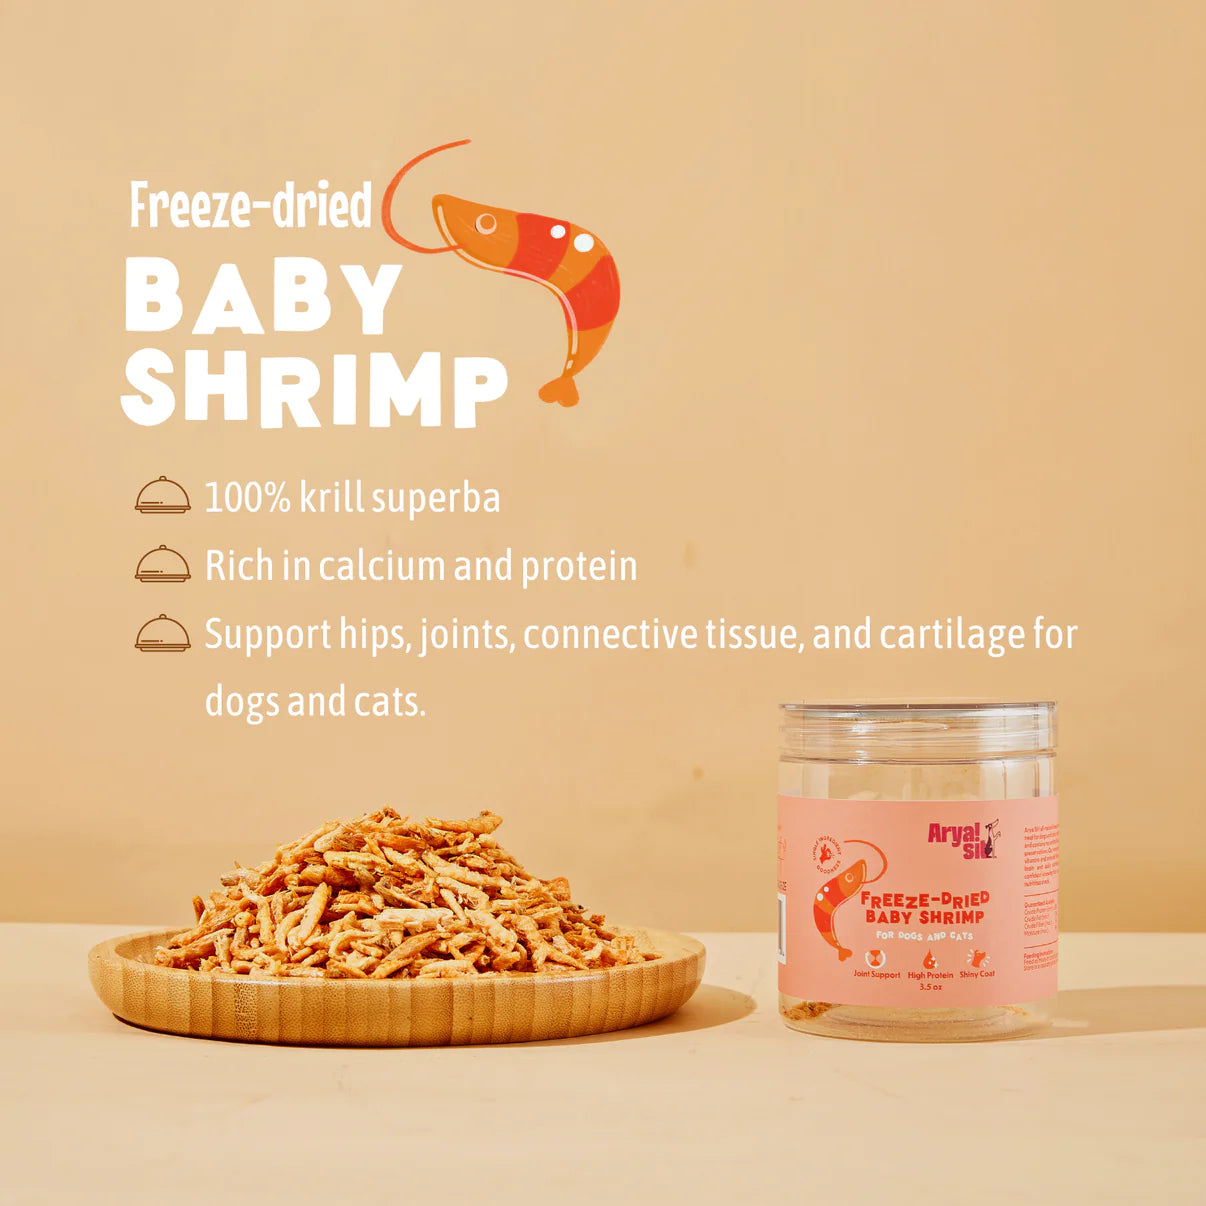 Freeze-dried Baby Shrimp